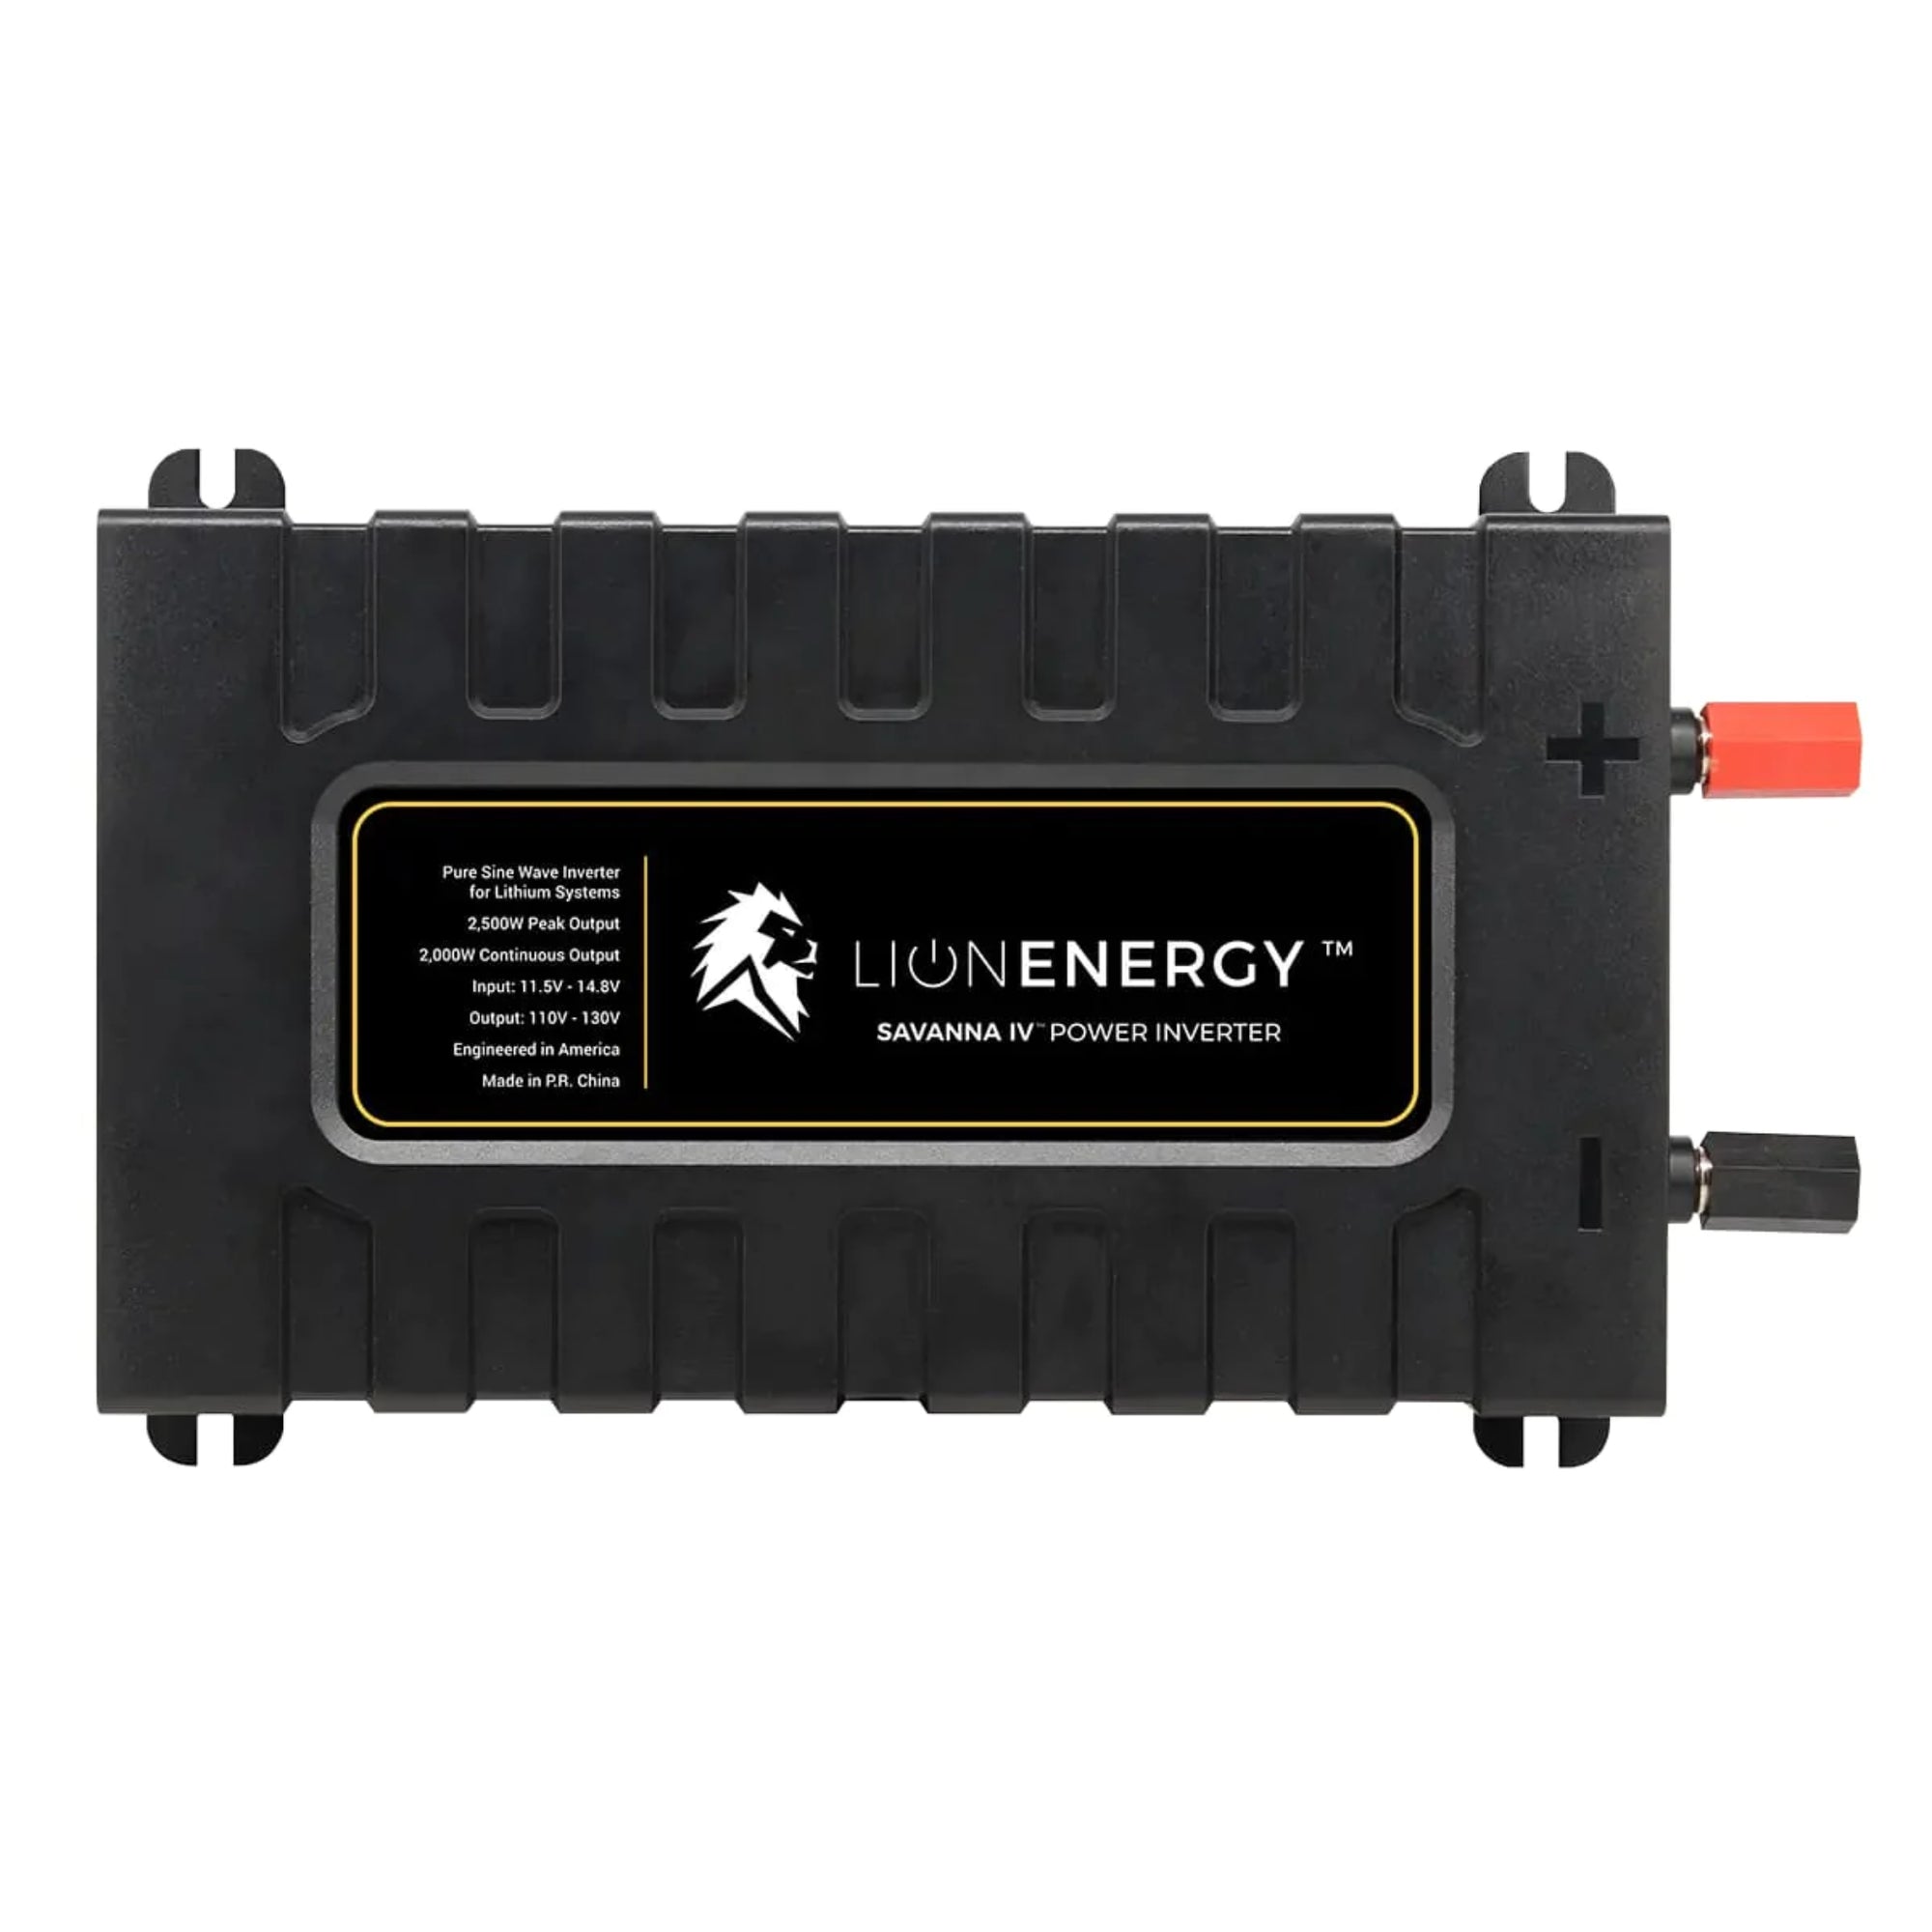 Lion Energy | Savanna IV Power Inverter | 2000W